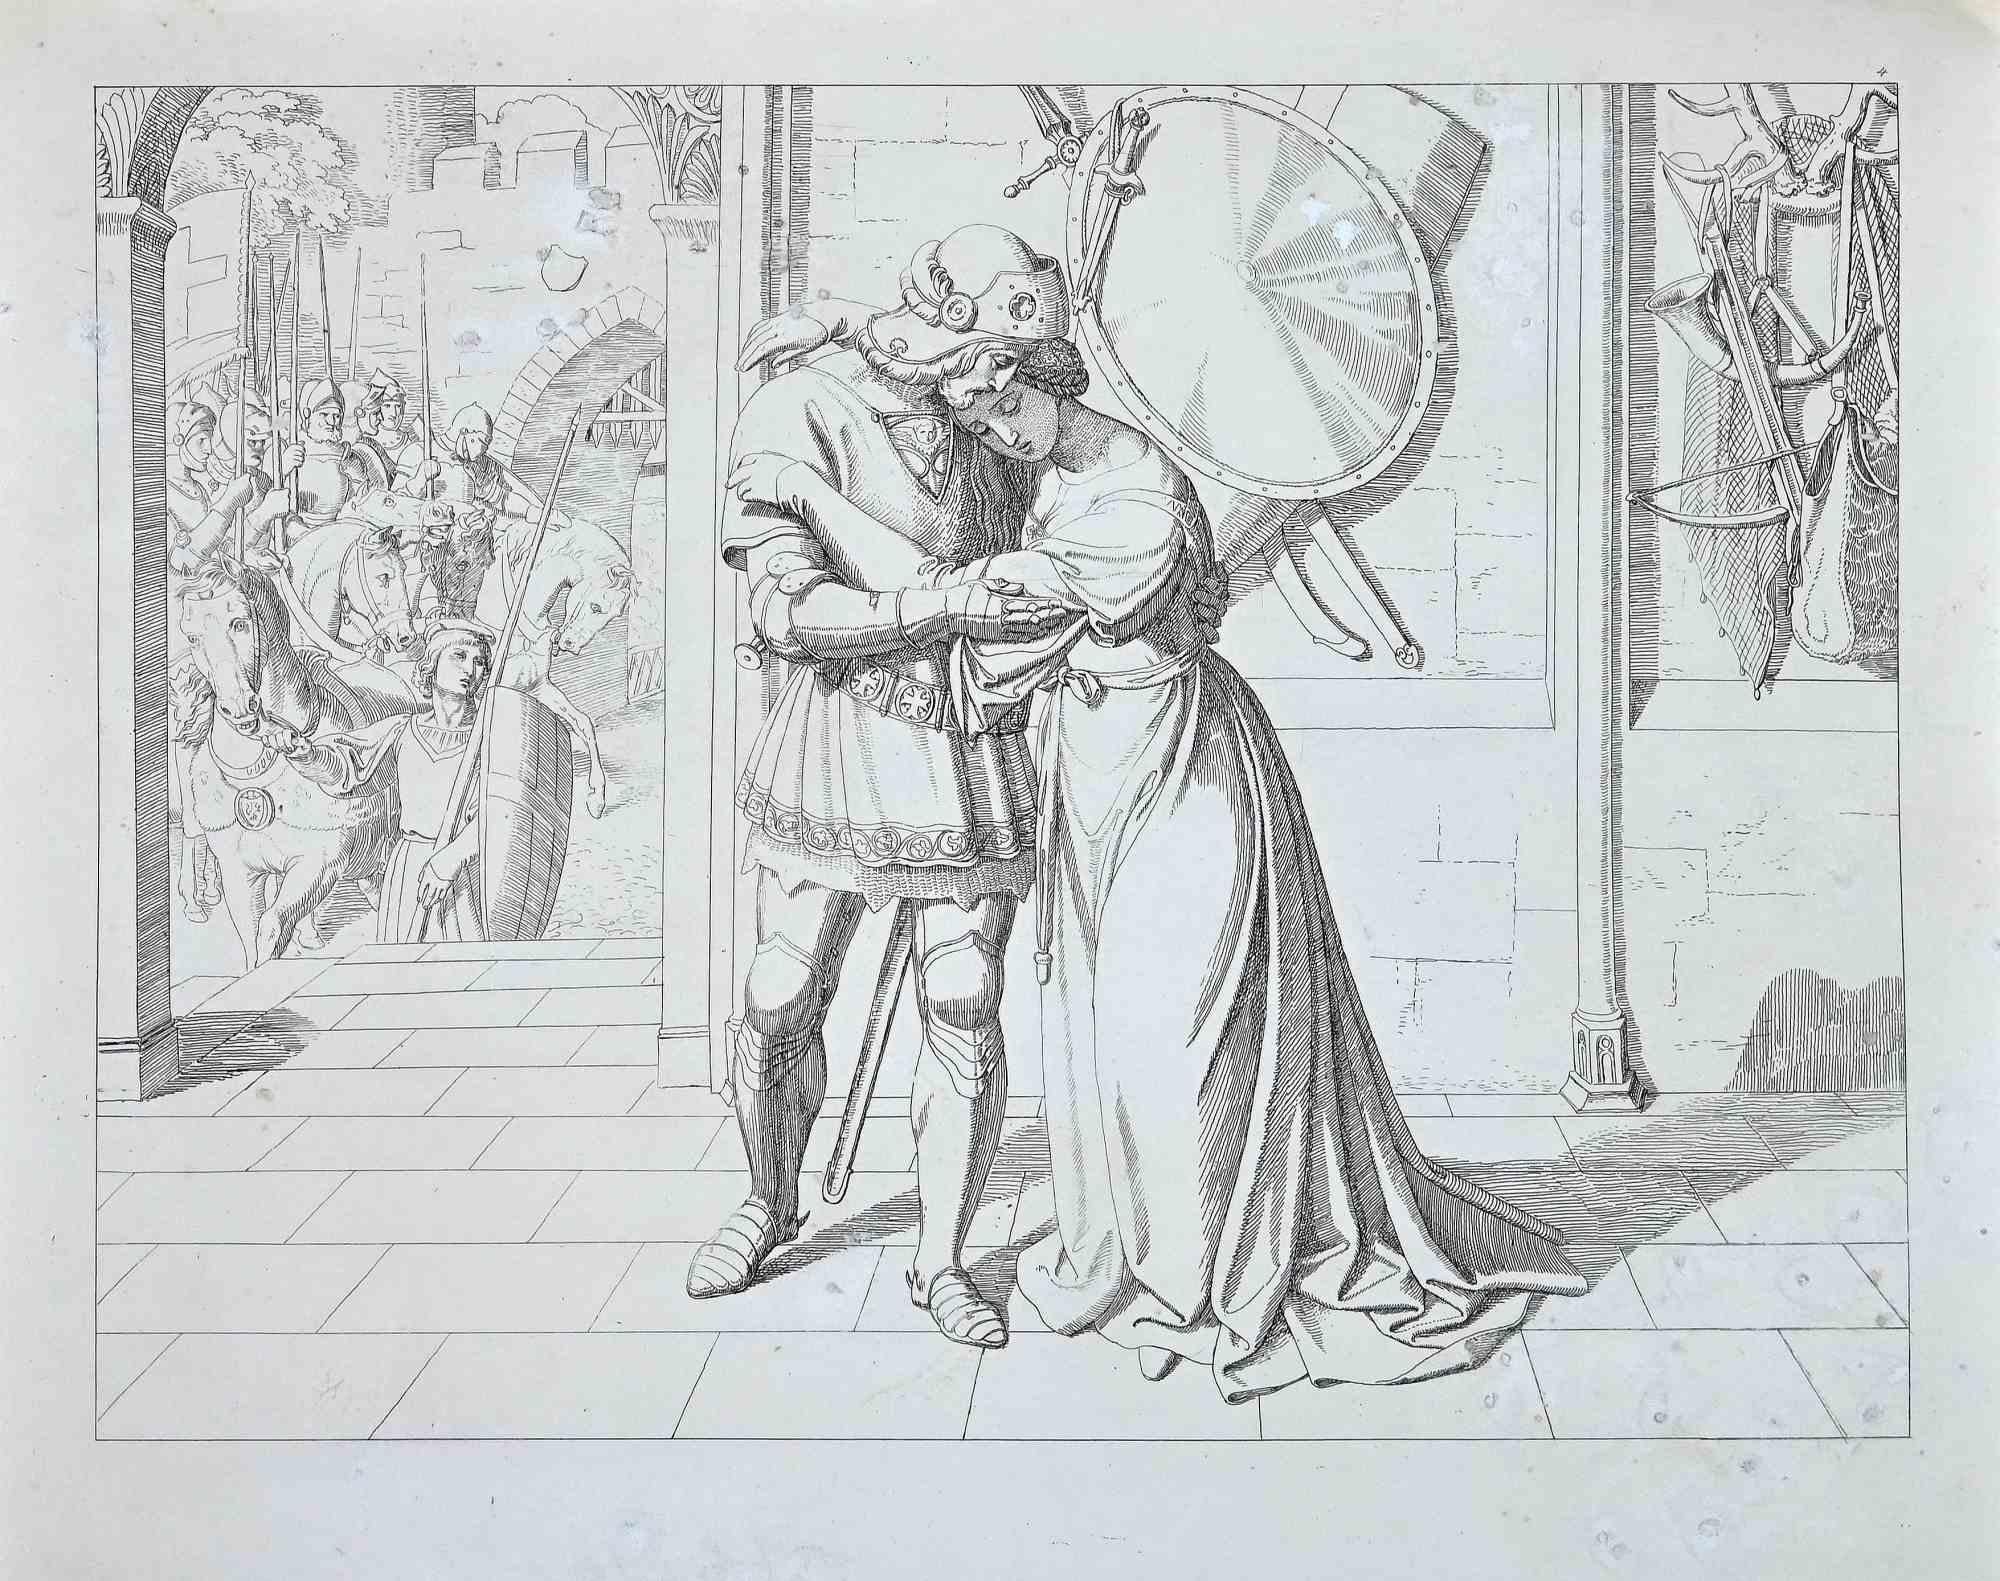 Josef Ritter von Führich Figurative Print - Scene from The Life and Death of Saint Genoveva - Original Etching - 1830s